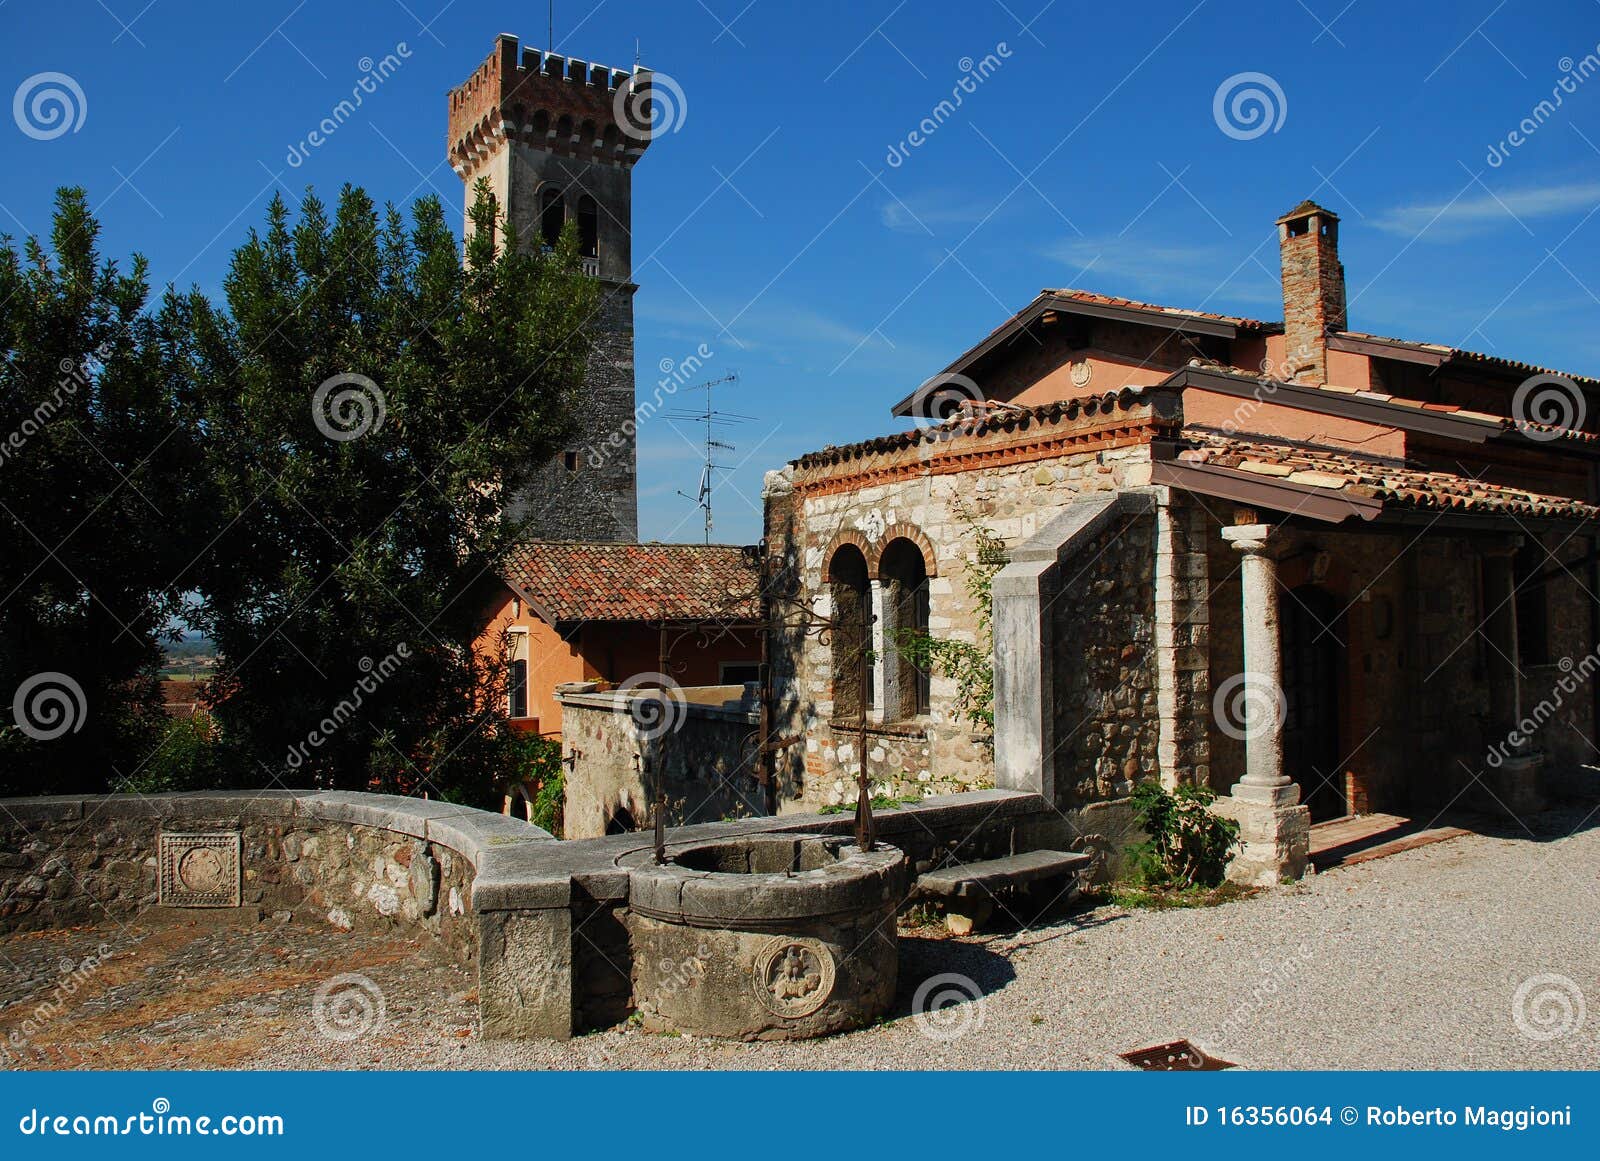 lonato, brescia. medieval village